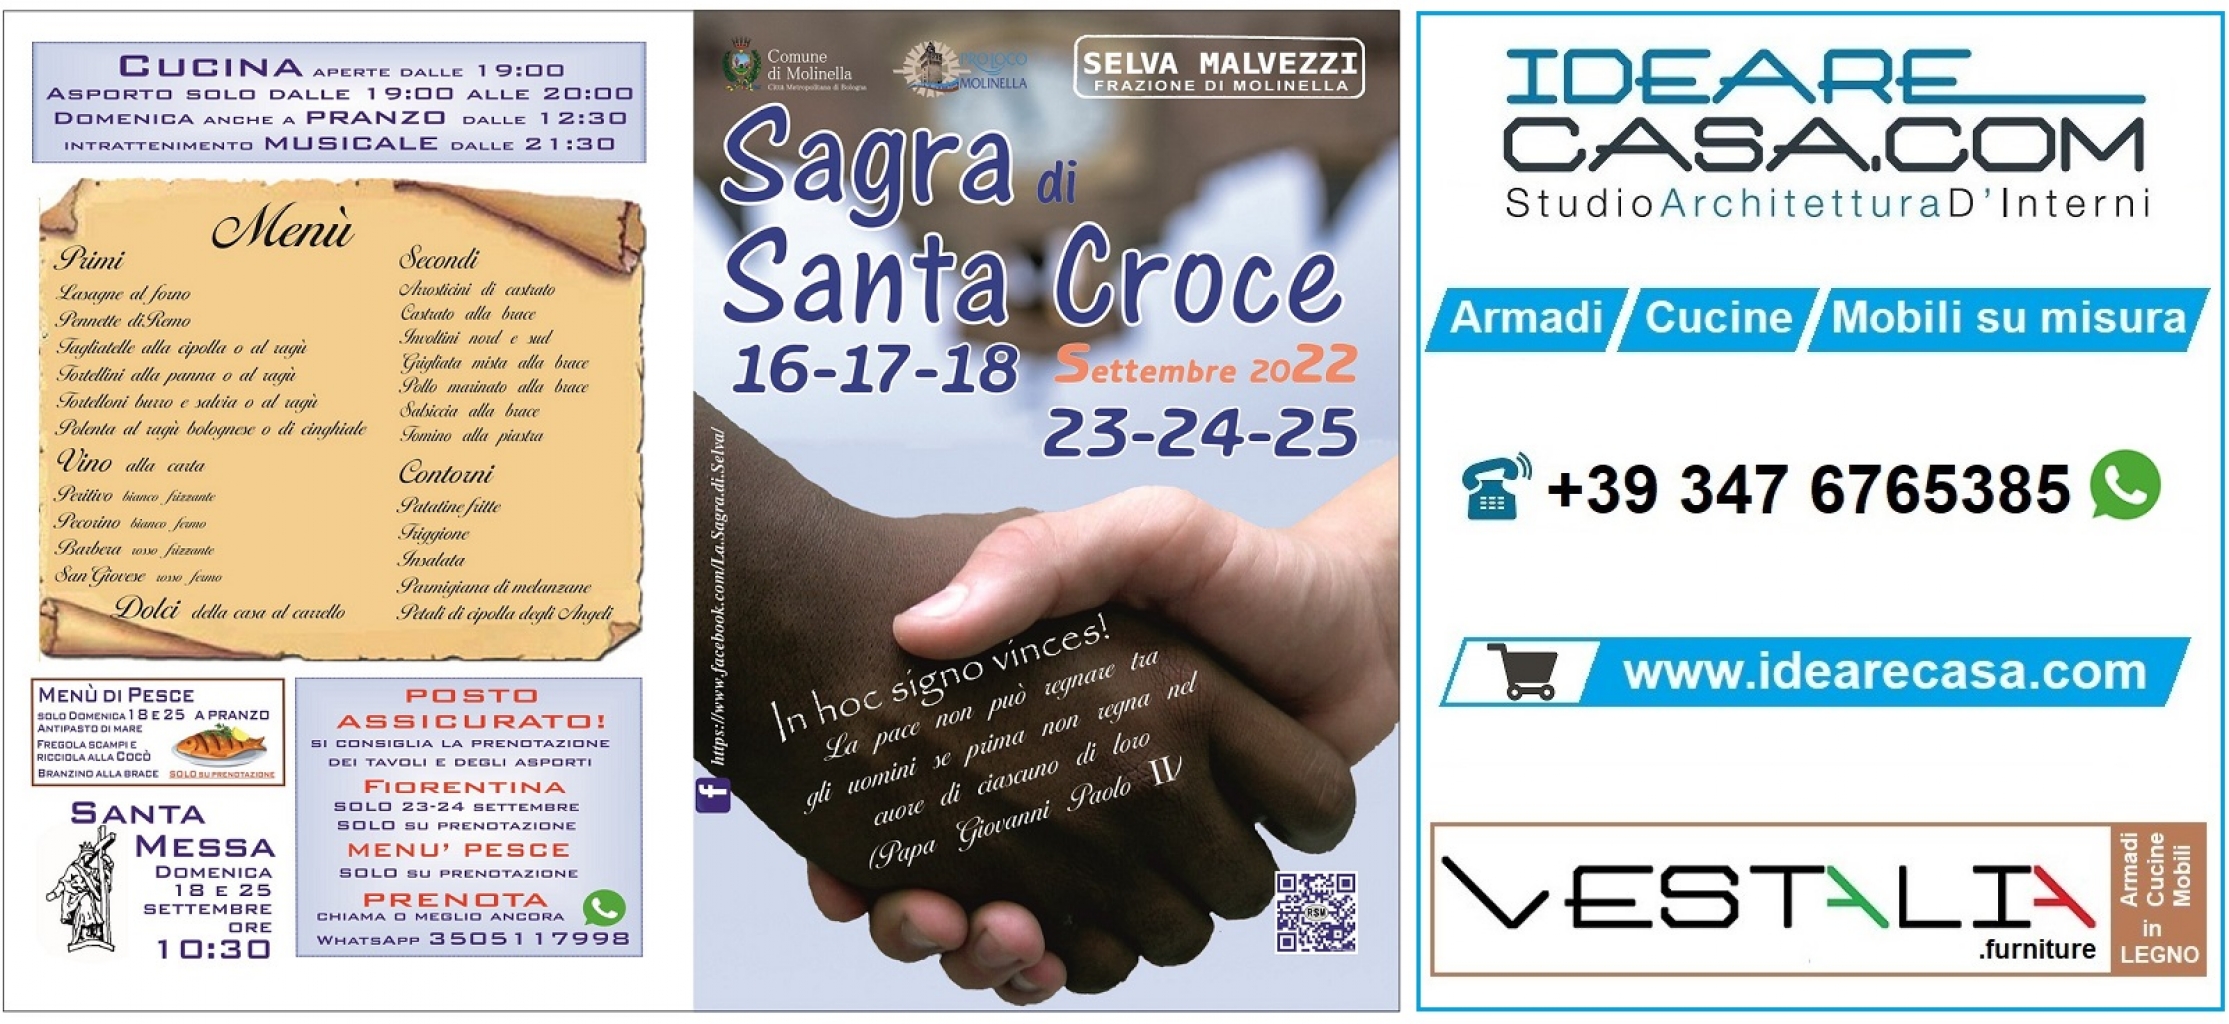 Sagra di Selva Malvezzi 2022 a Molinella - Bologna. IdeareCasa.com, VESTALIA, CucineBologna, ArmadiBologna sponsor.